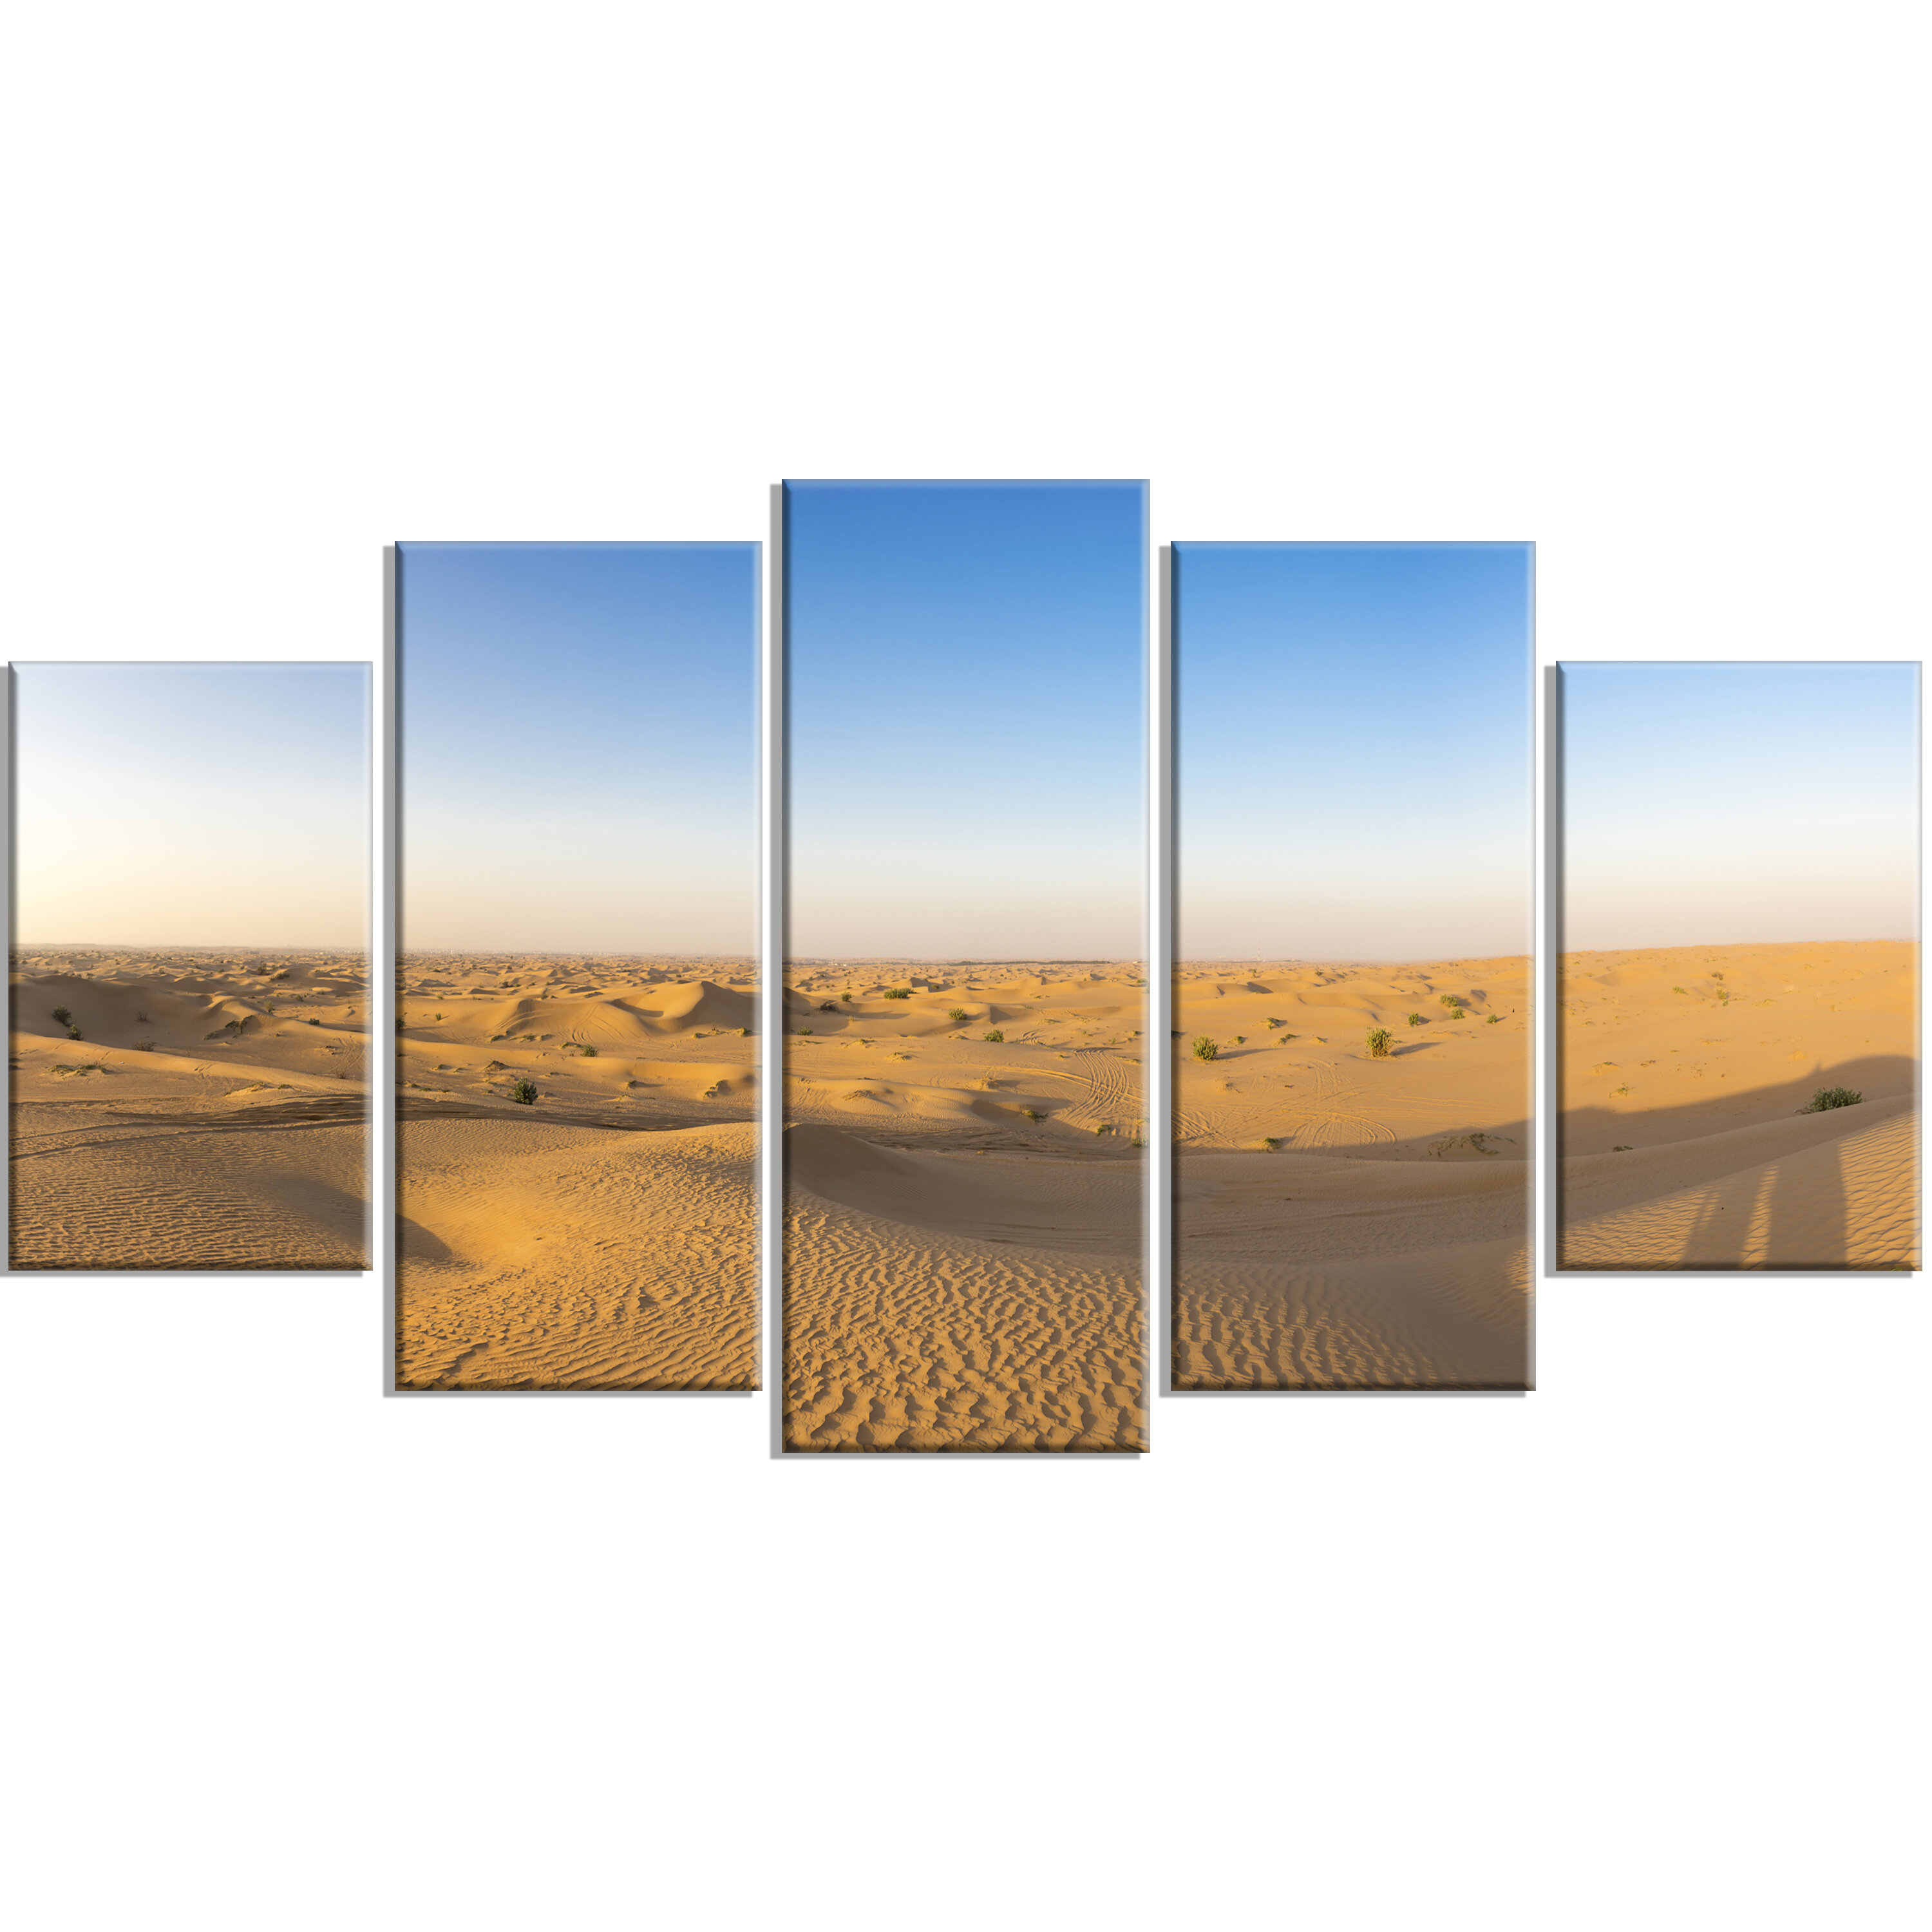 Designart Sand Dunes Desert In Dubai 5 Piece Wall Art On Wrapped Canvas Set Wayfair